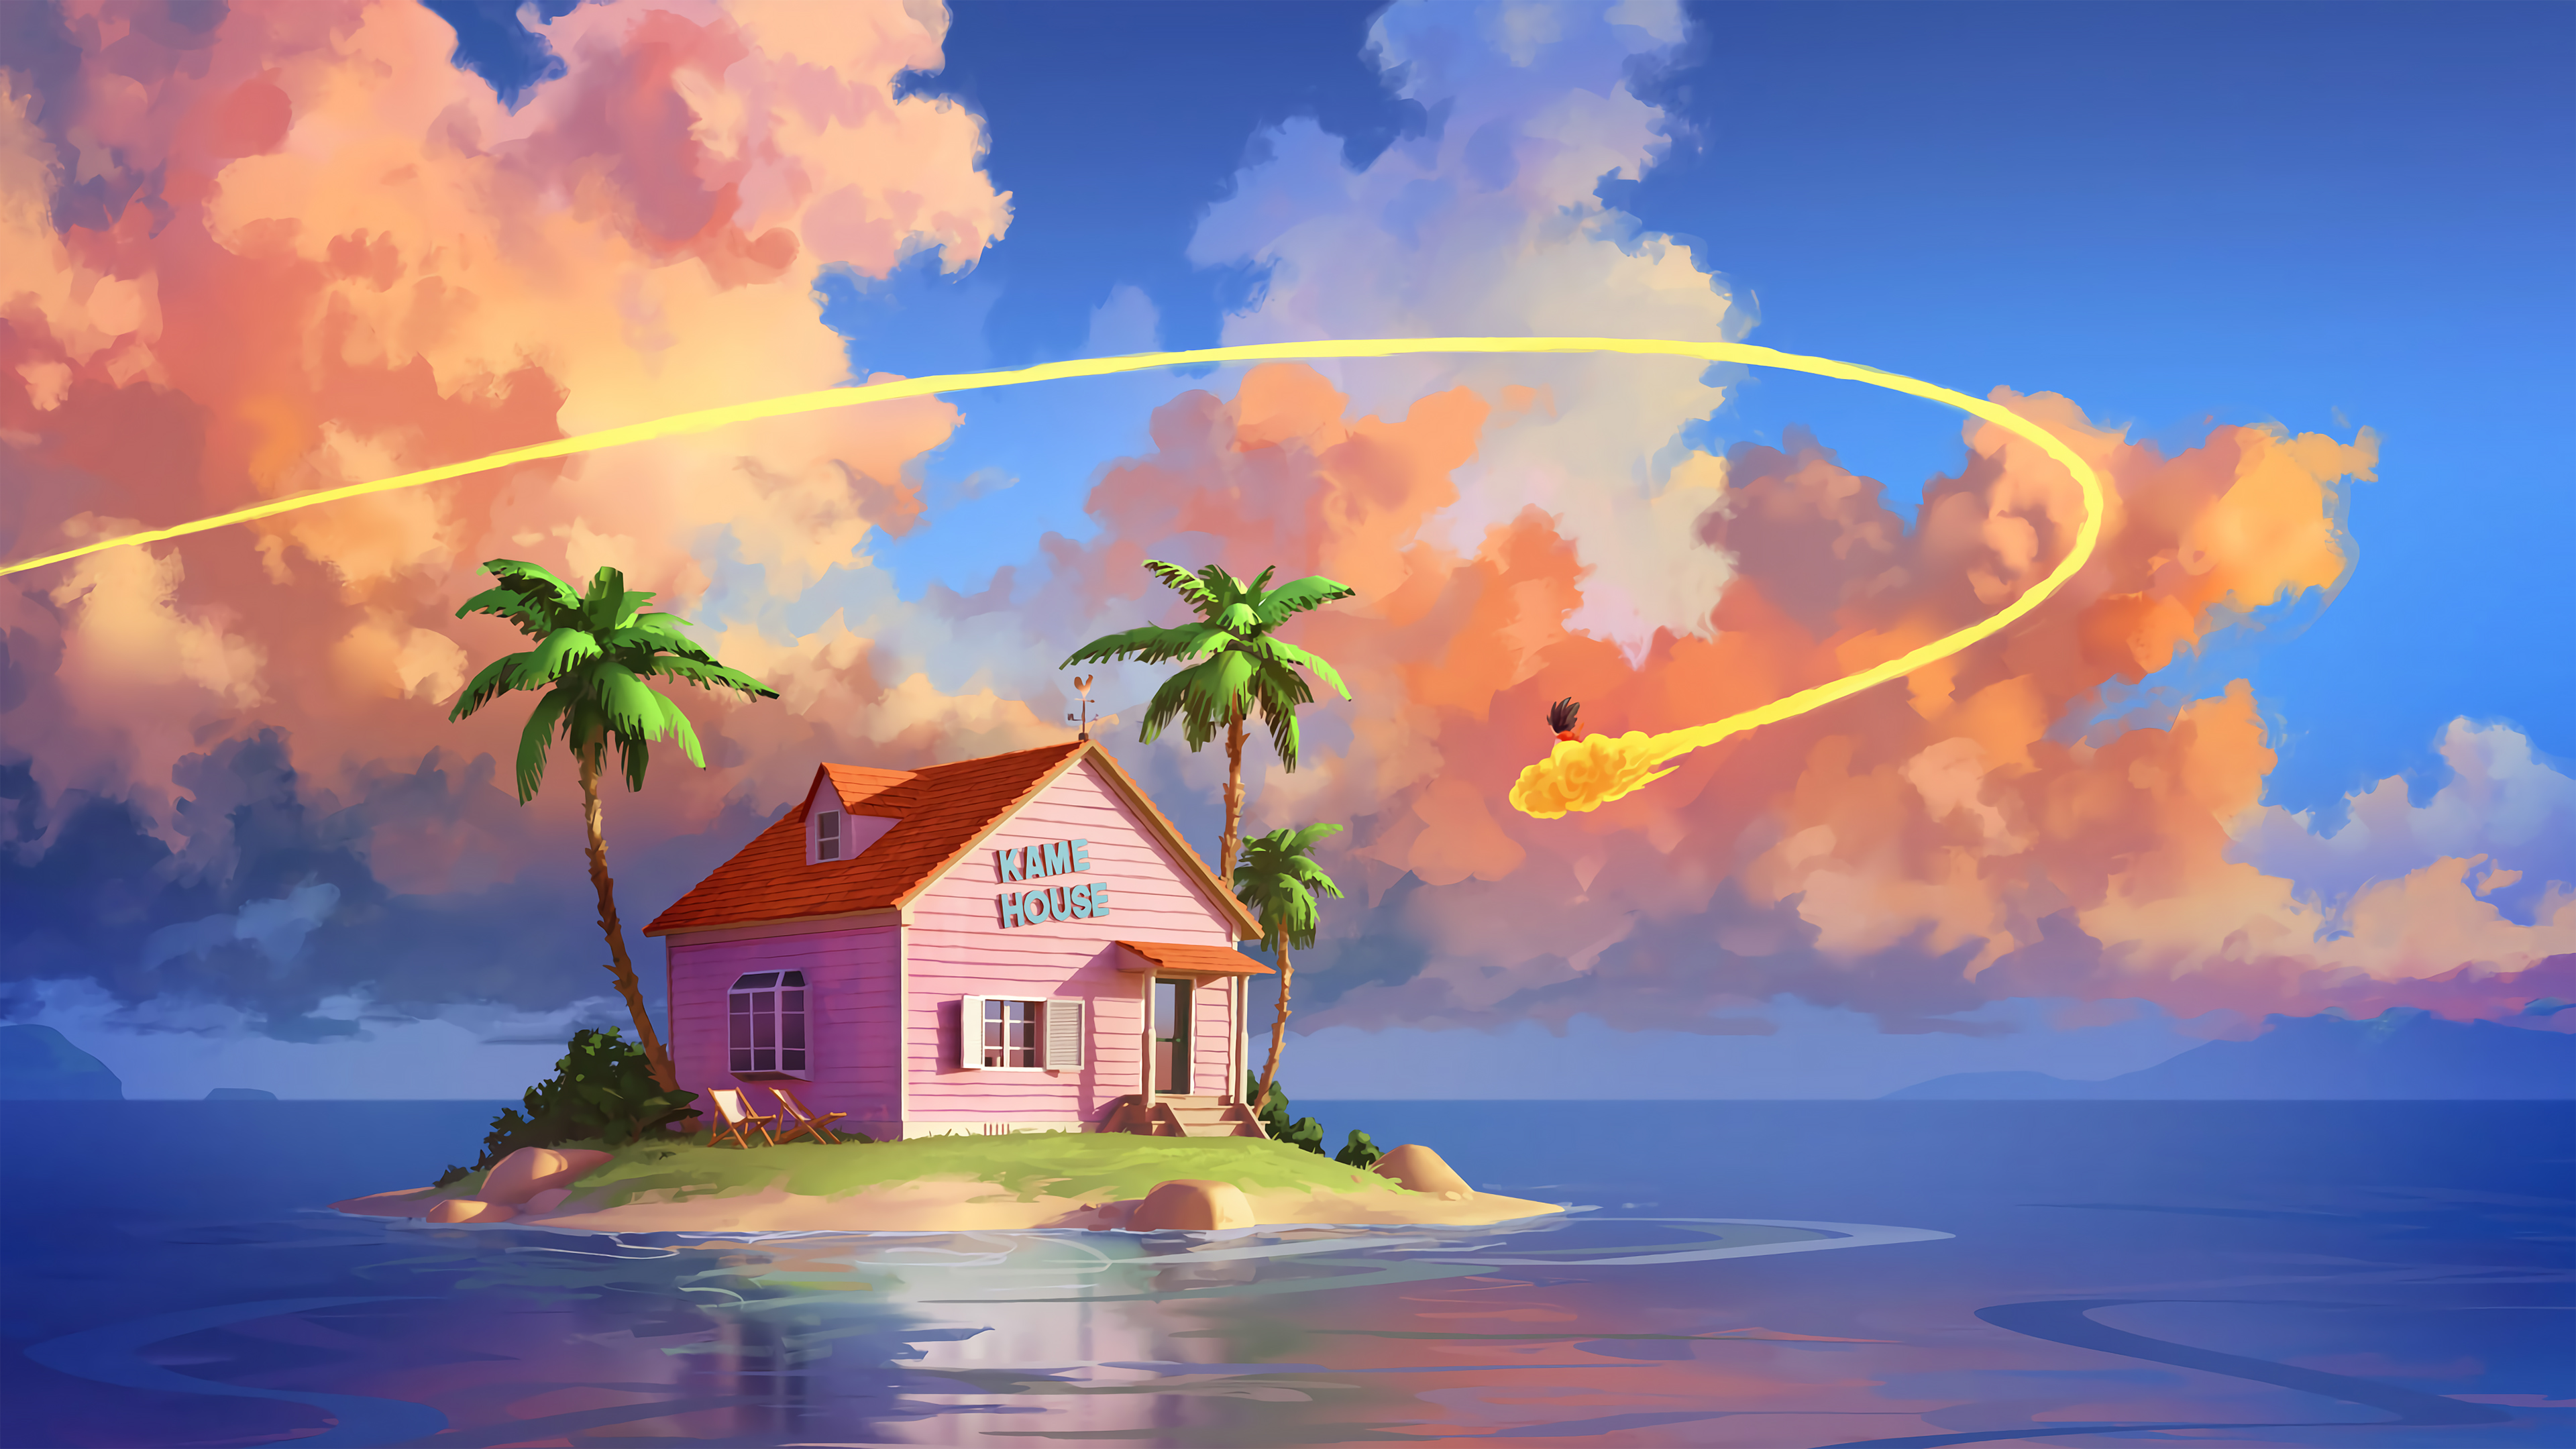 Digital Art Son Goku Dragon Ball Island Anime Clouds Sea Palm Trees House Water Sylvain Sarrailh 3840x2160